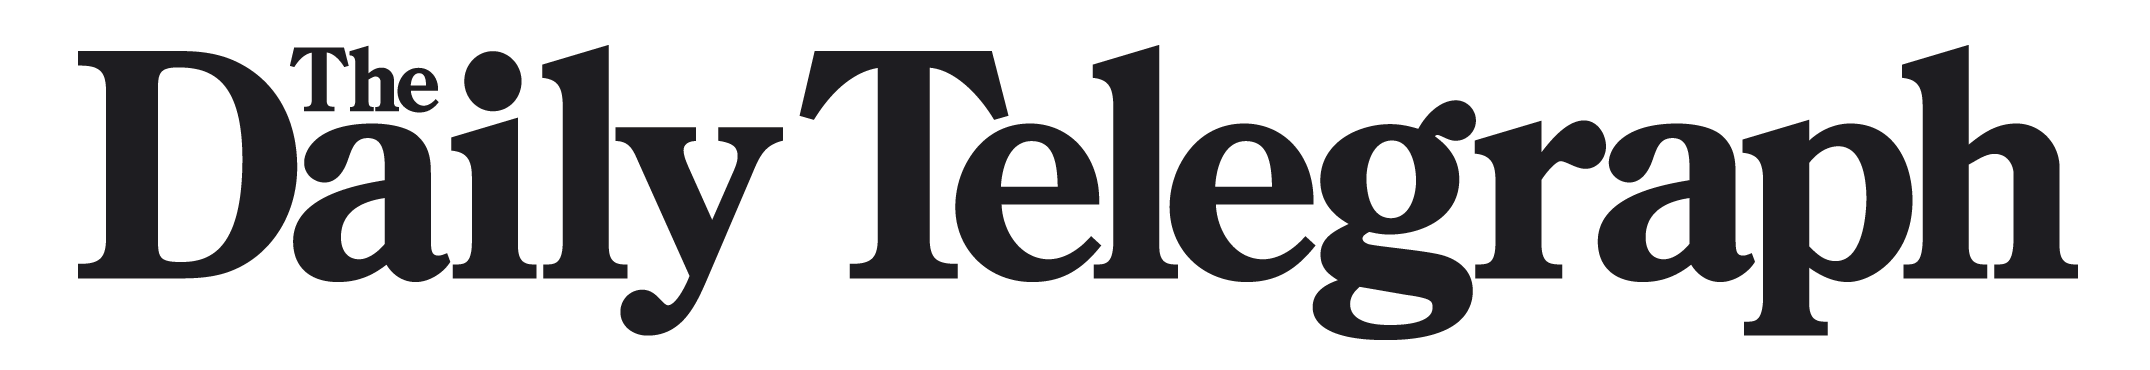 The Daily Telegraph Australien logo